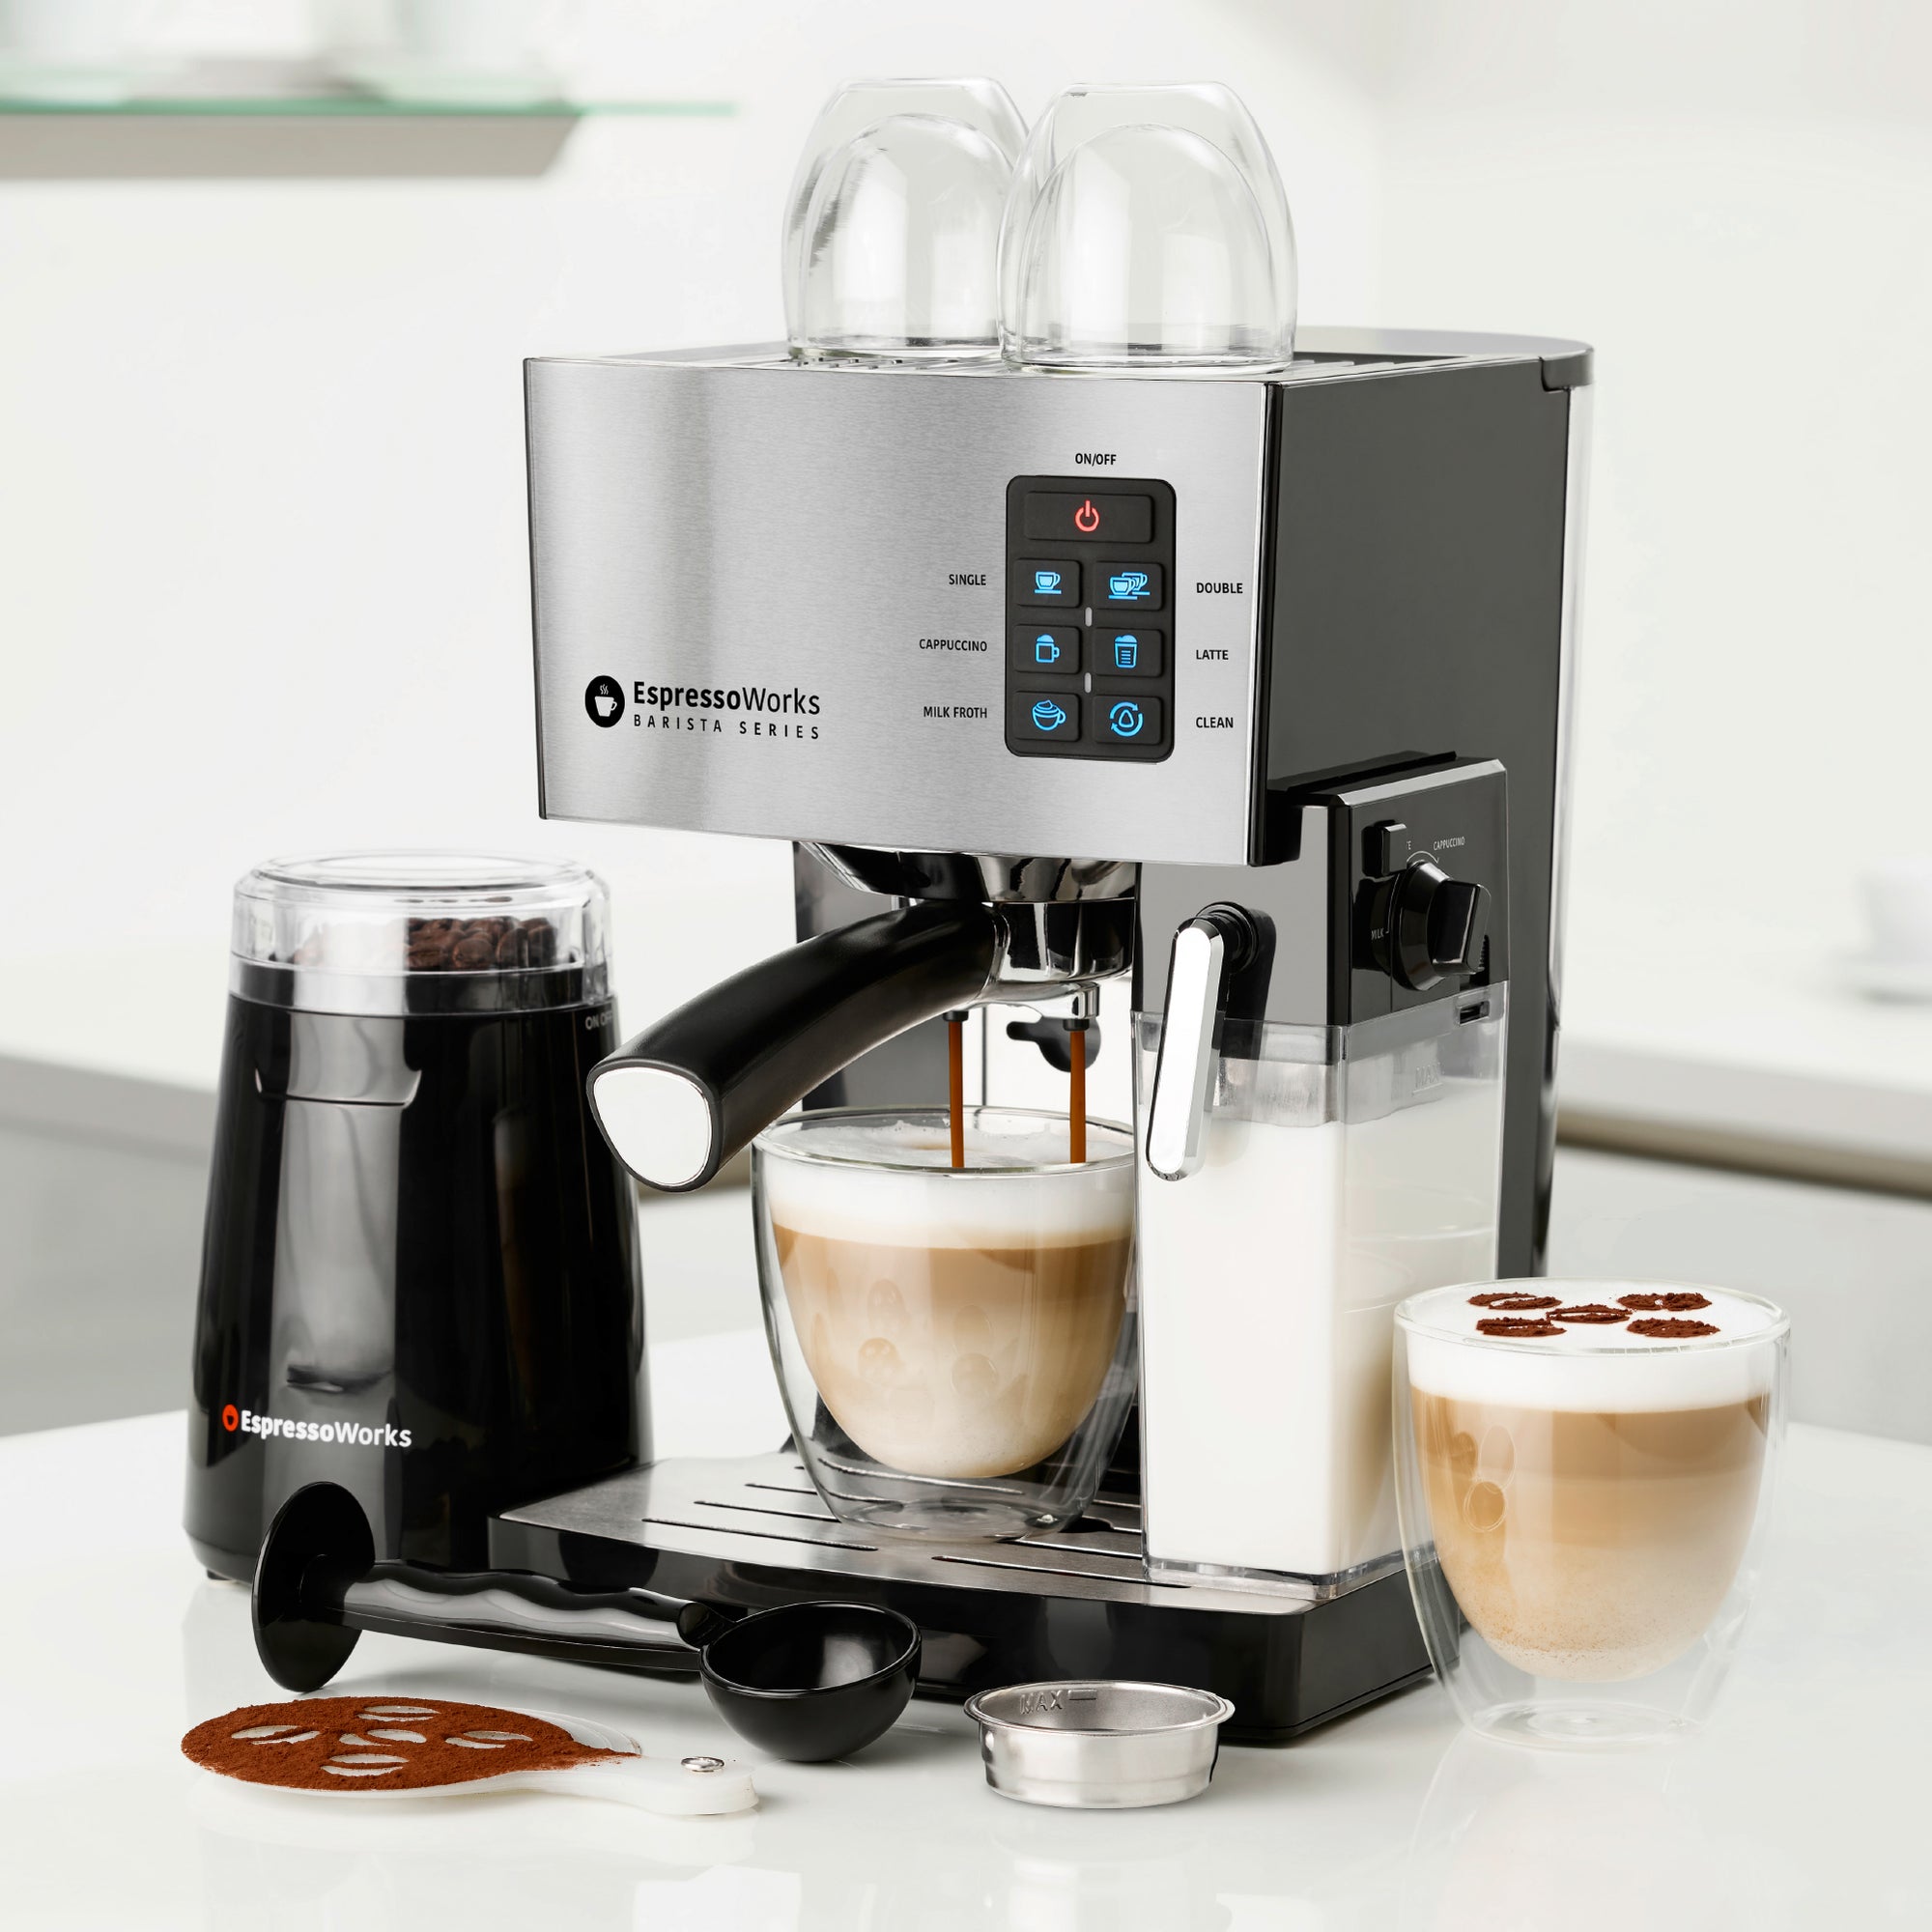 EspressoWorks 10-Piece Coffee and Espresso Machine Set - Stainless Steel